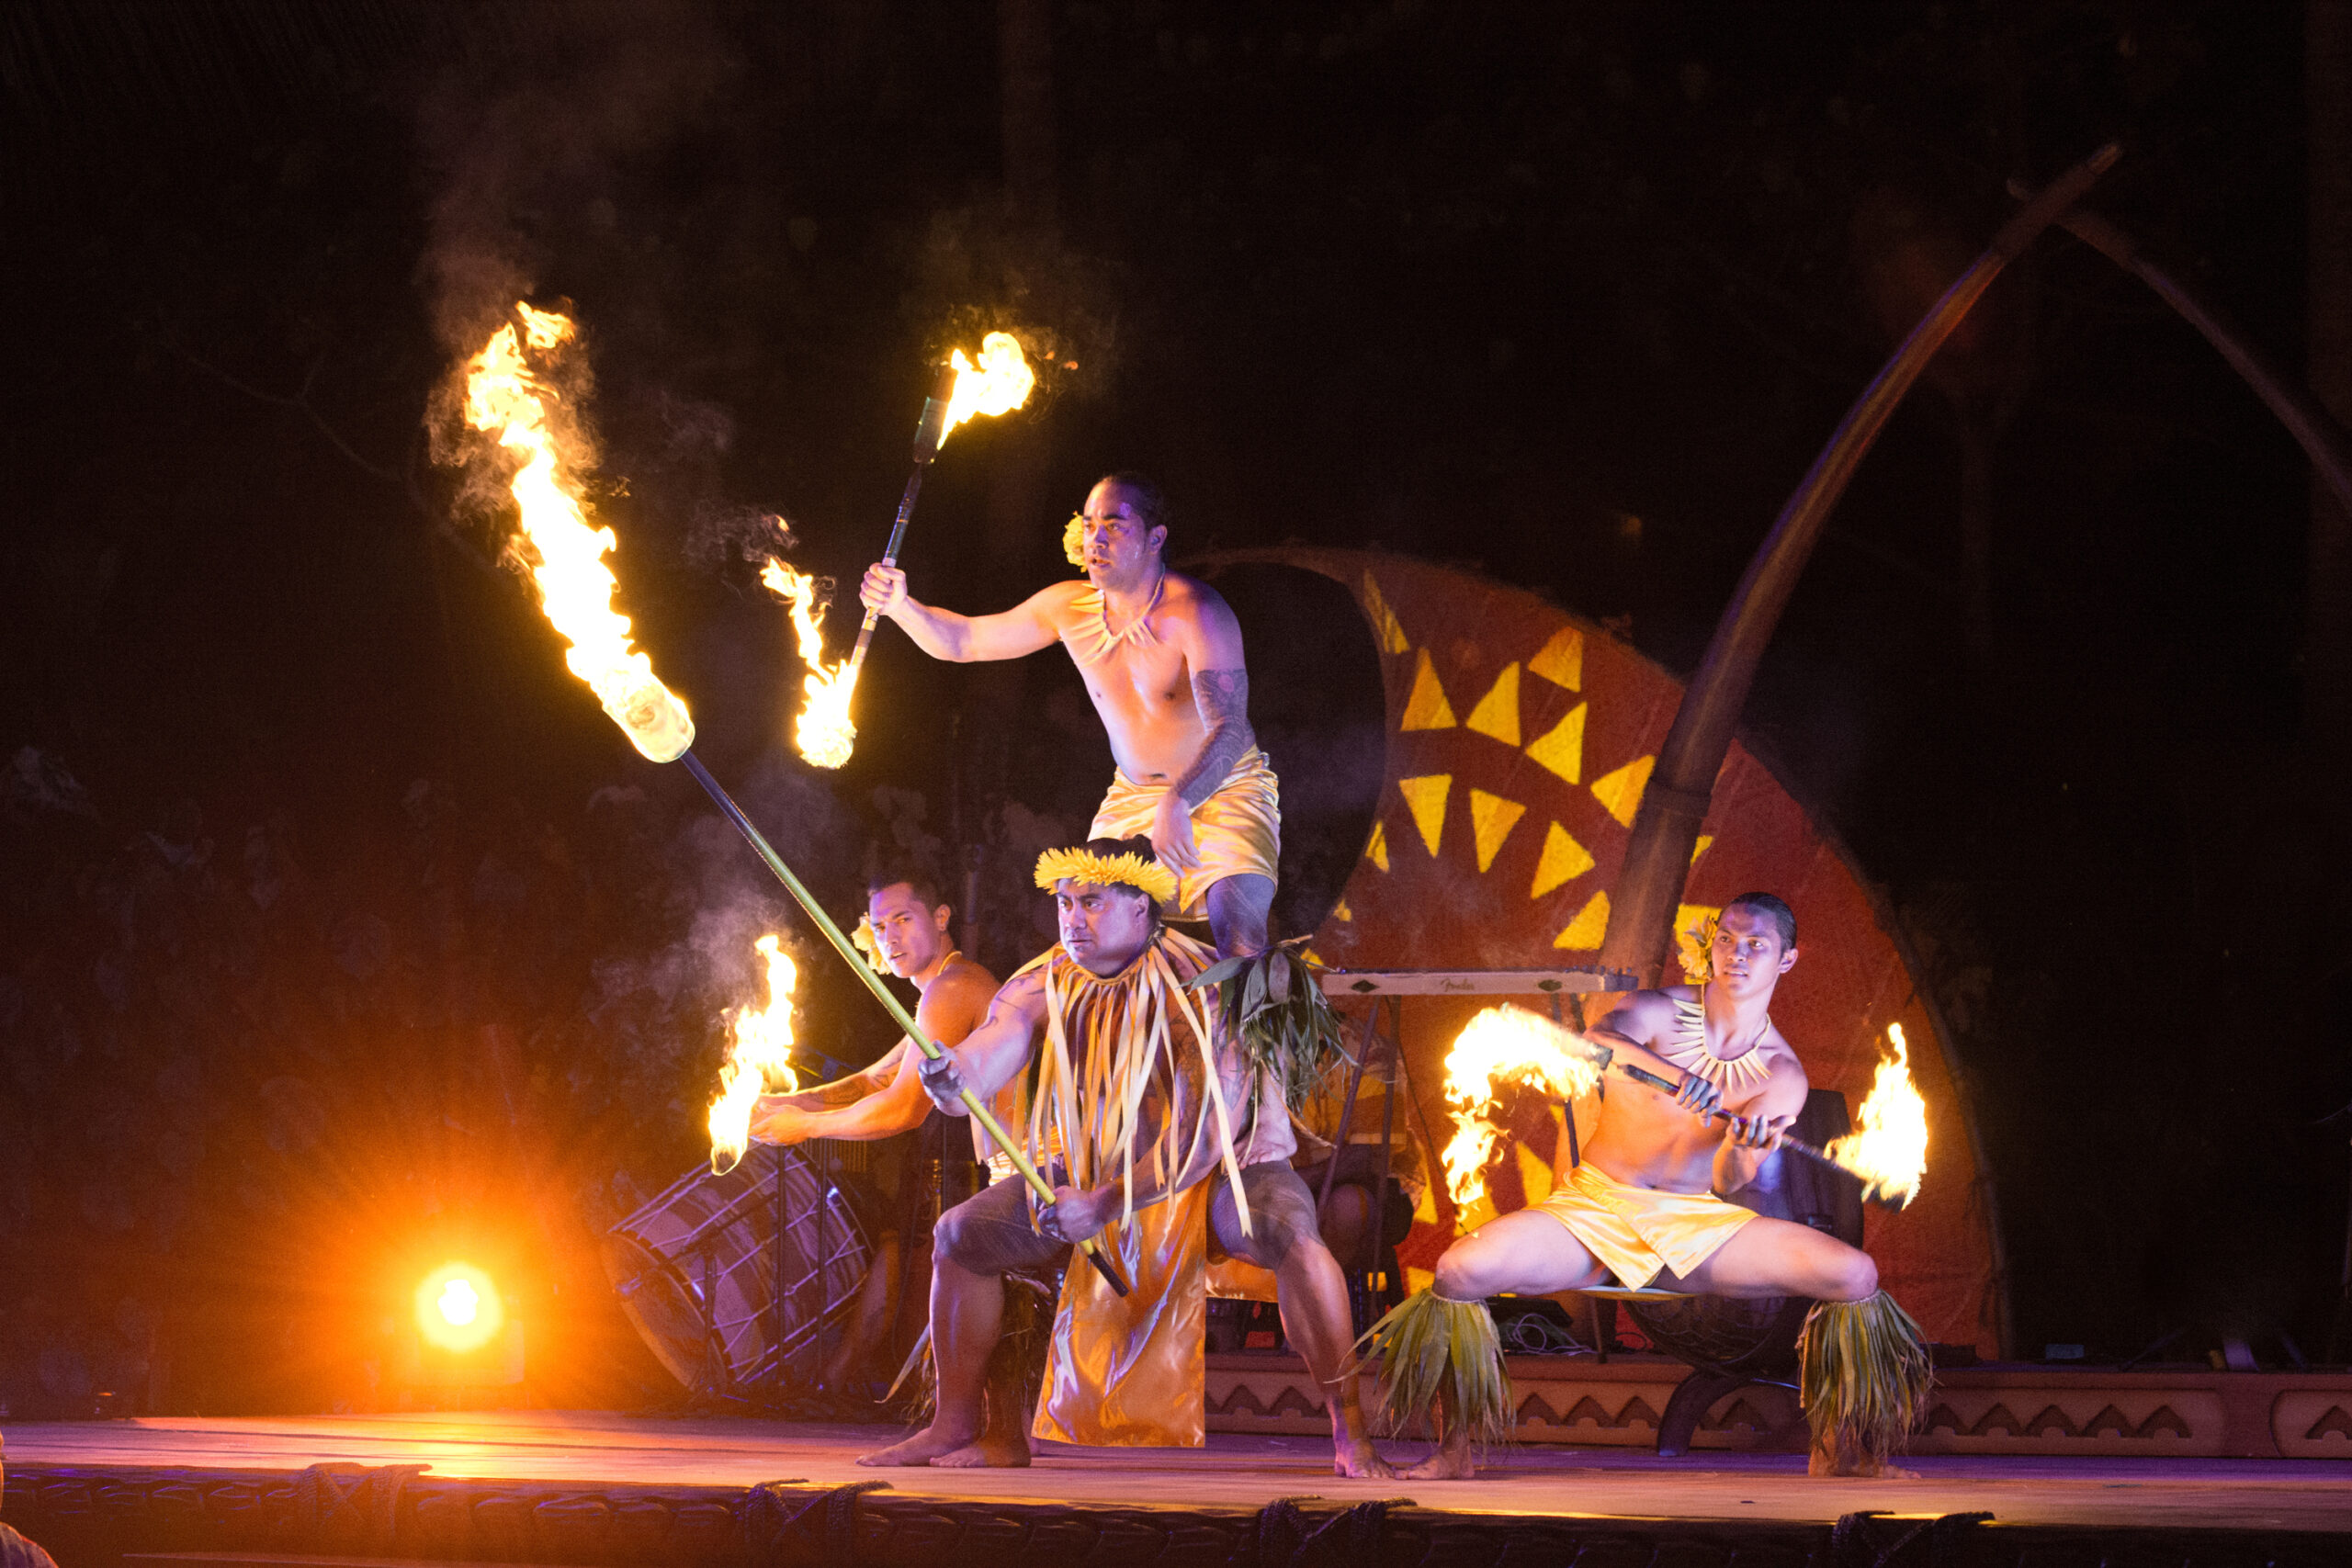 lual show at Aluani Disney resort in Hawaii